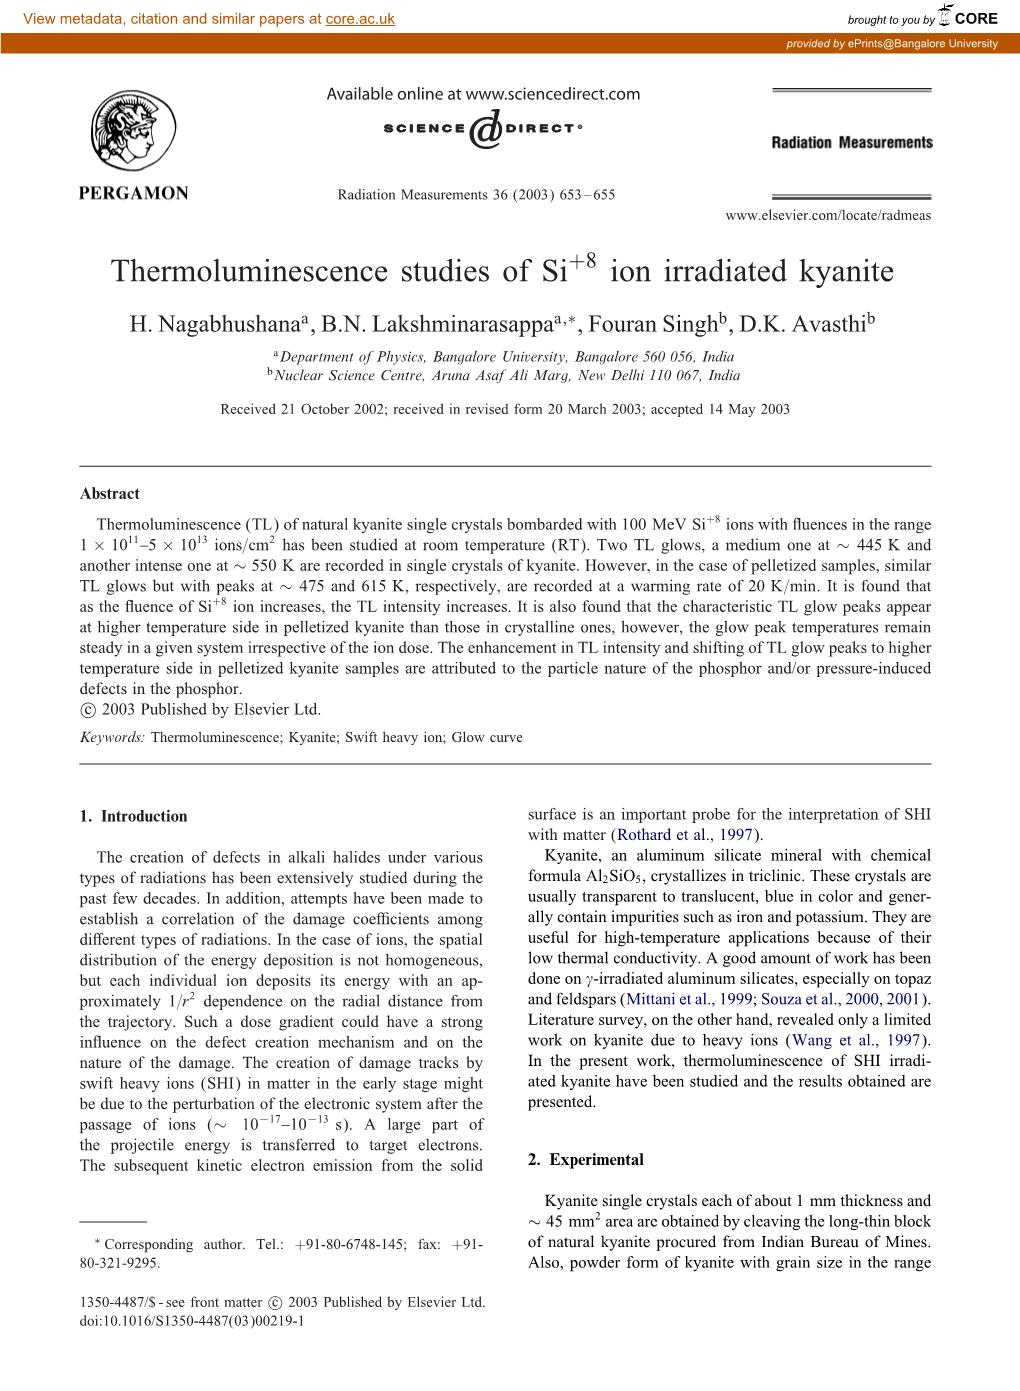 Thermoluminescence Studies of Si+8 Ion Irradiated Kyanite